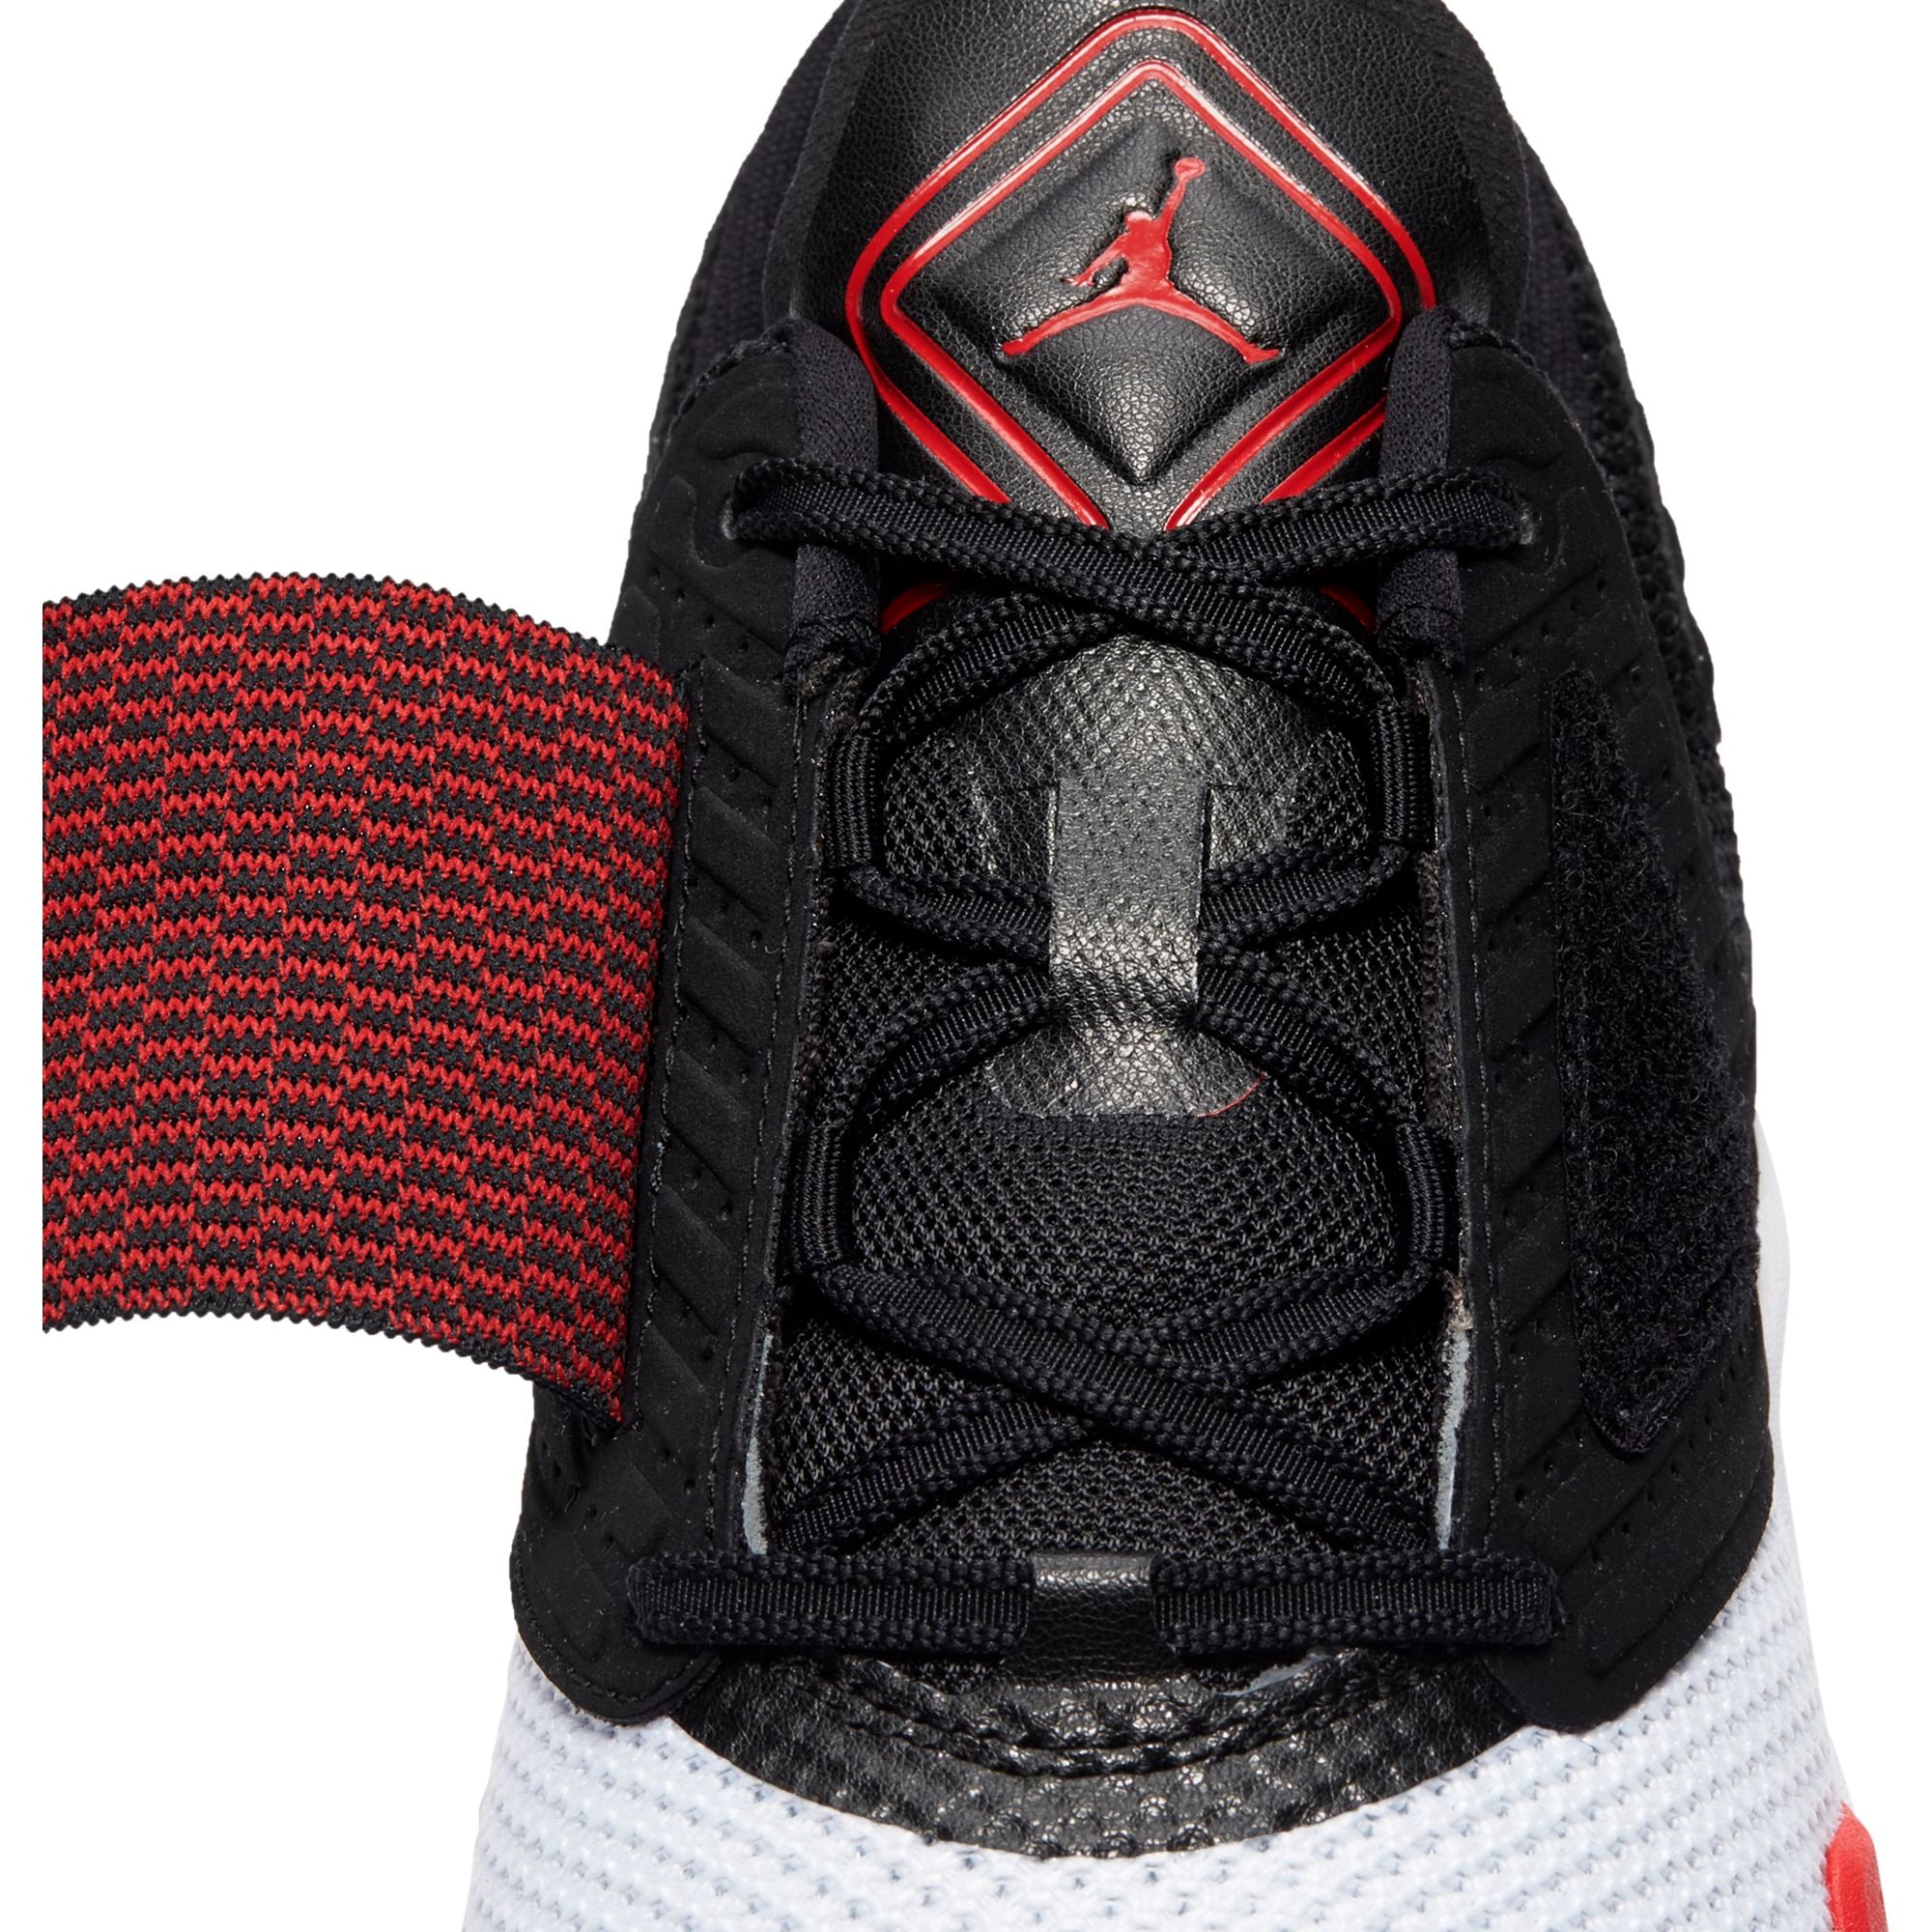 Nike Jordan Training Relentless Training Shoe - White/Black/University Red